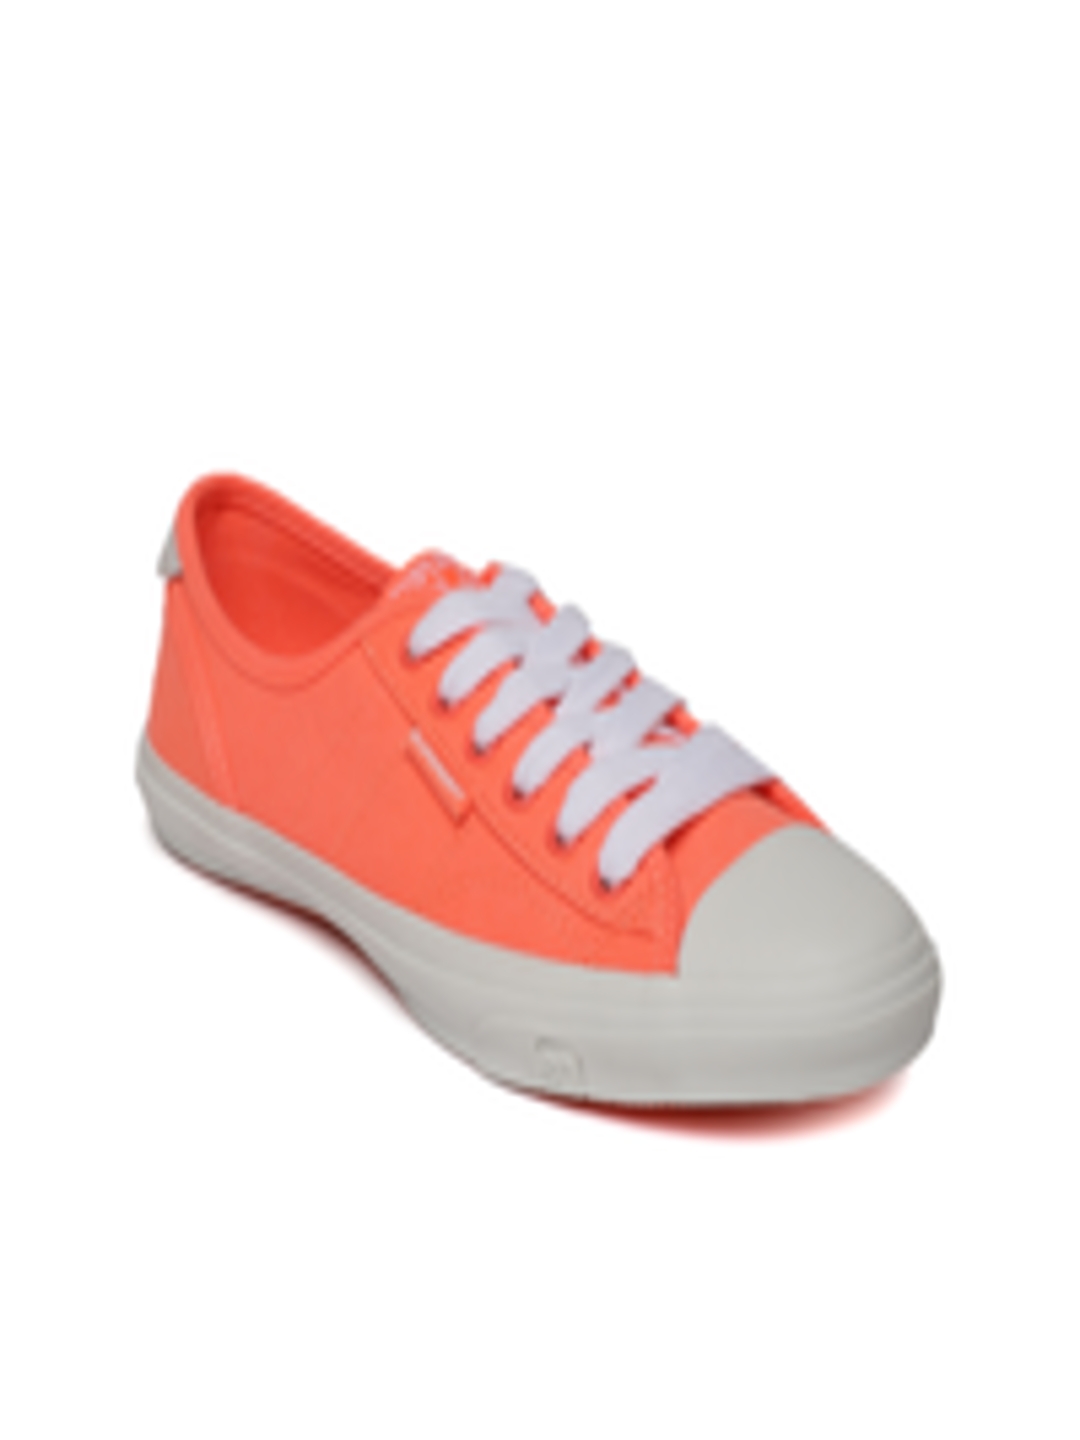 Buy Superdry Women Orange Low Pro Sneakers Casual Shoes